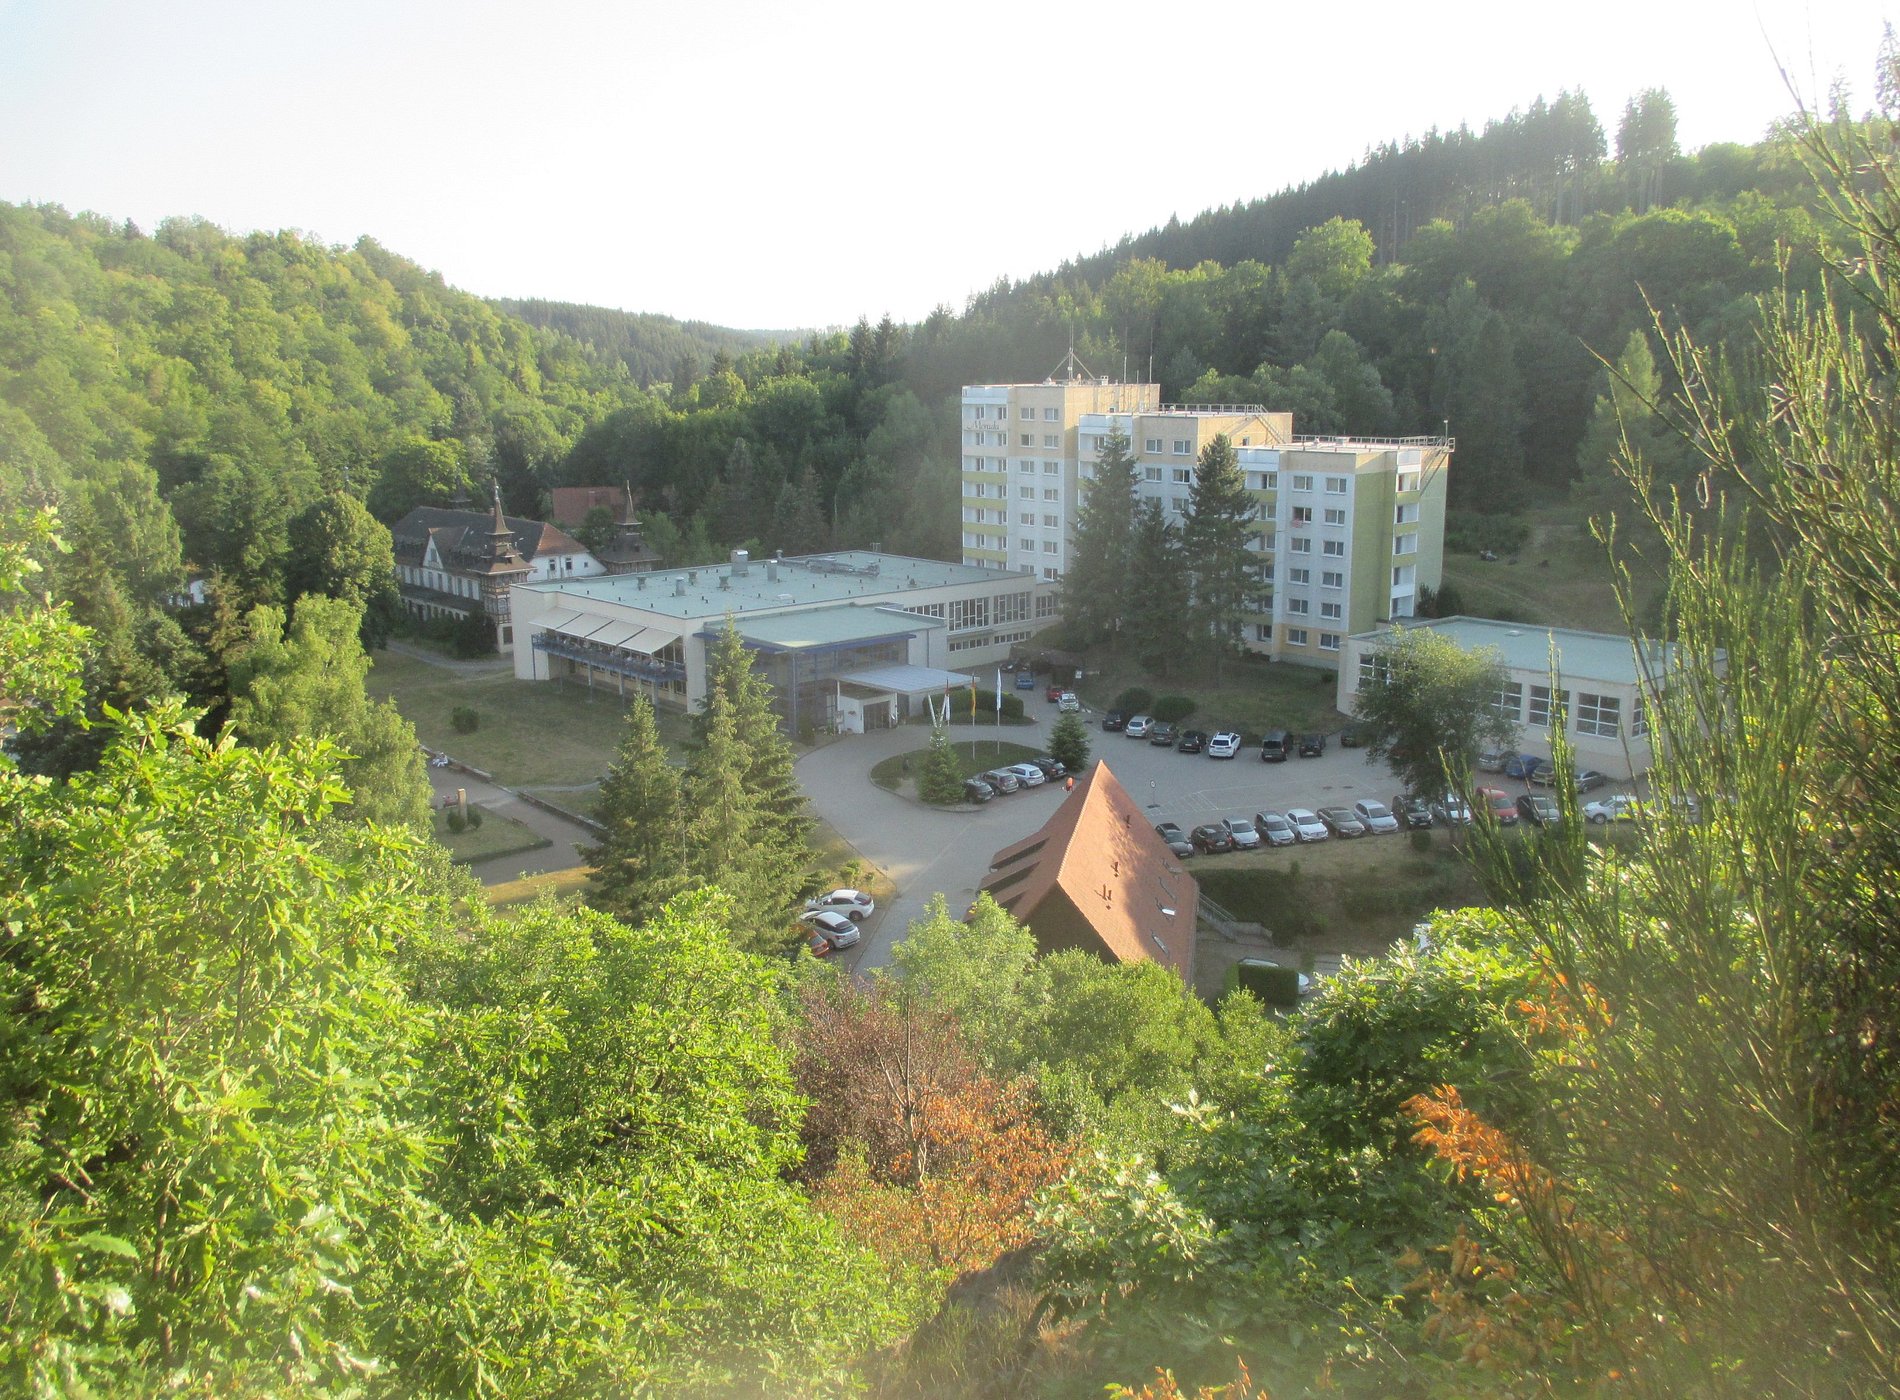 Morada Hotel Alexisbad Harz image